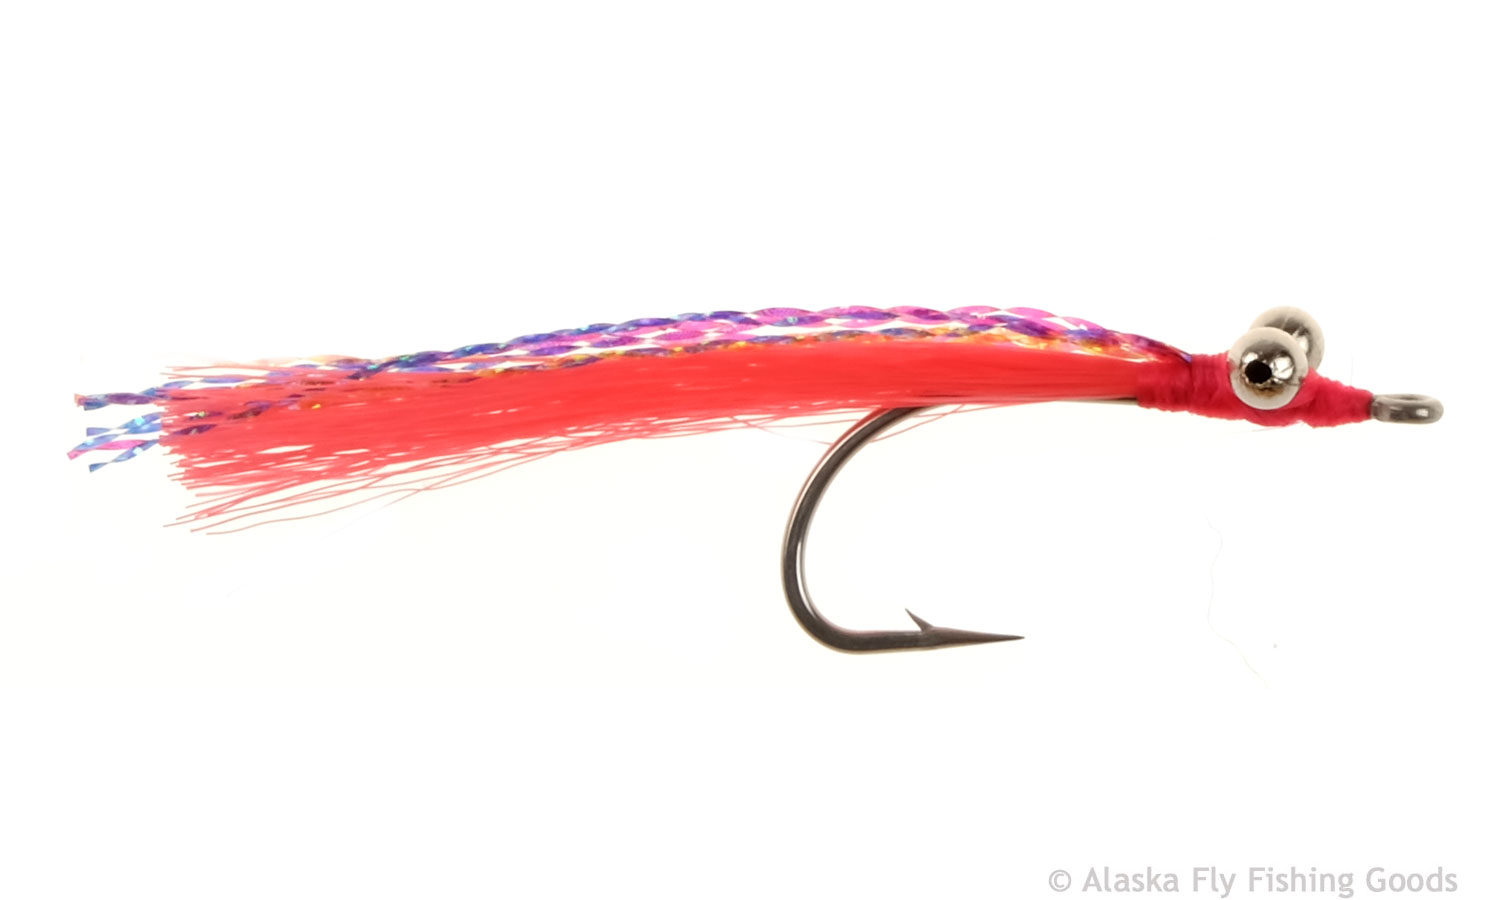 Humpy Hooker #4 - Pink Salmon Flies - Alaska Fly Fishing Goods